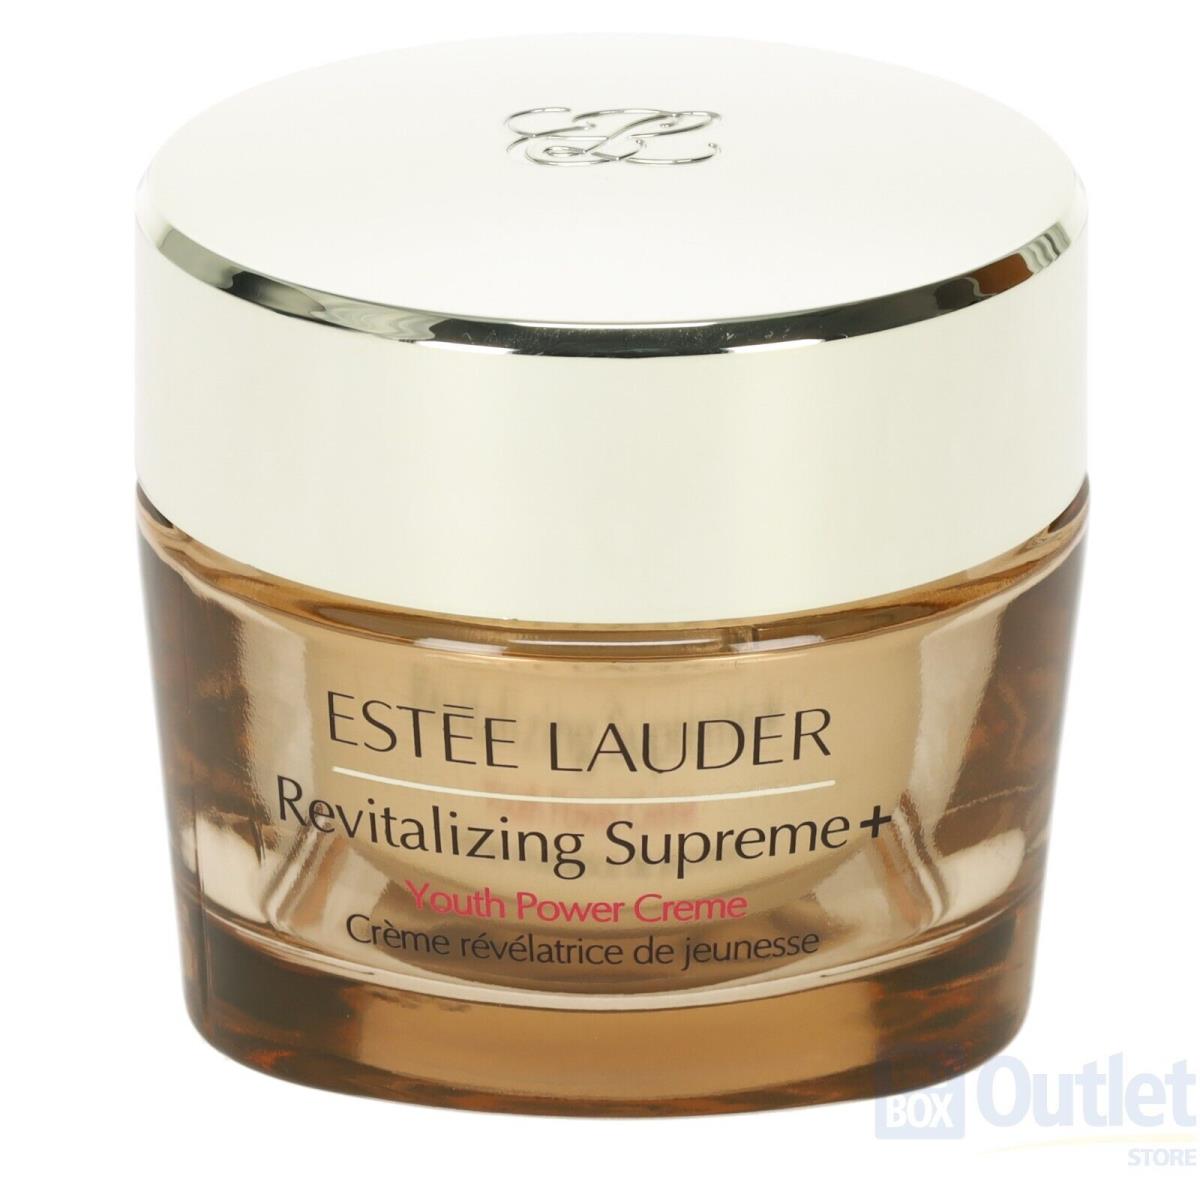 Estee Lauder - Revitalizing Supreme Plus Youth Power Creme - 2.5 oz - New/sealed